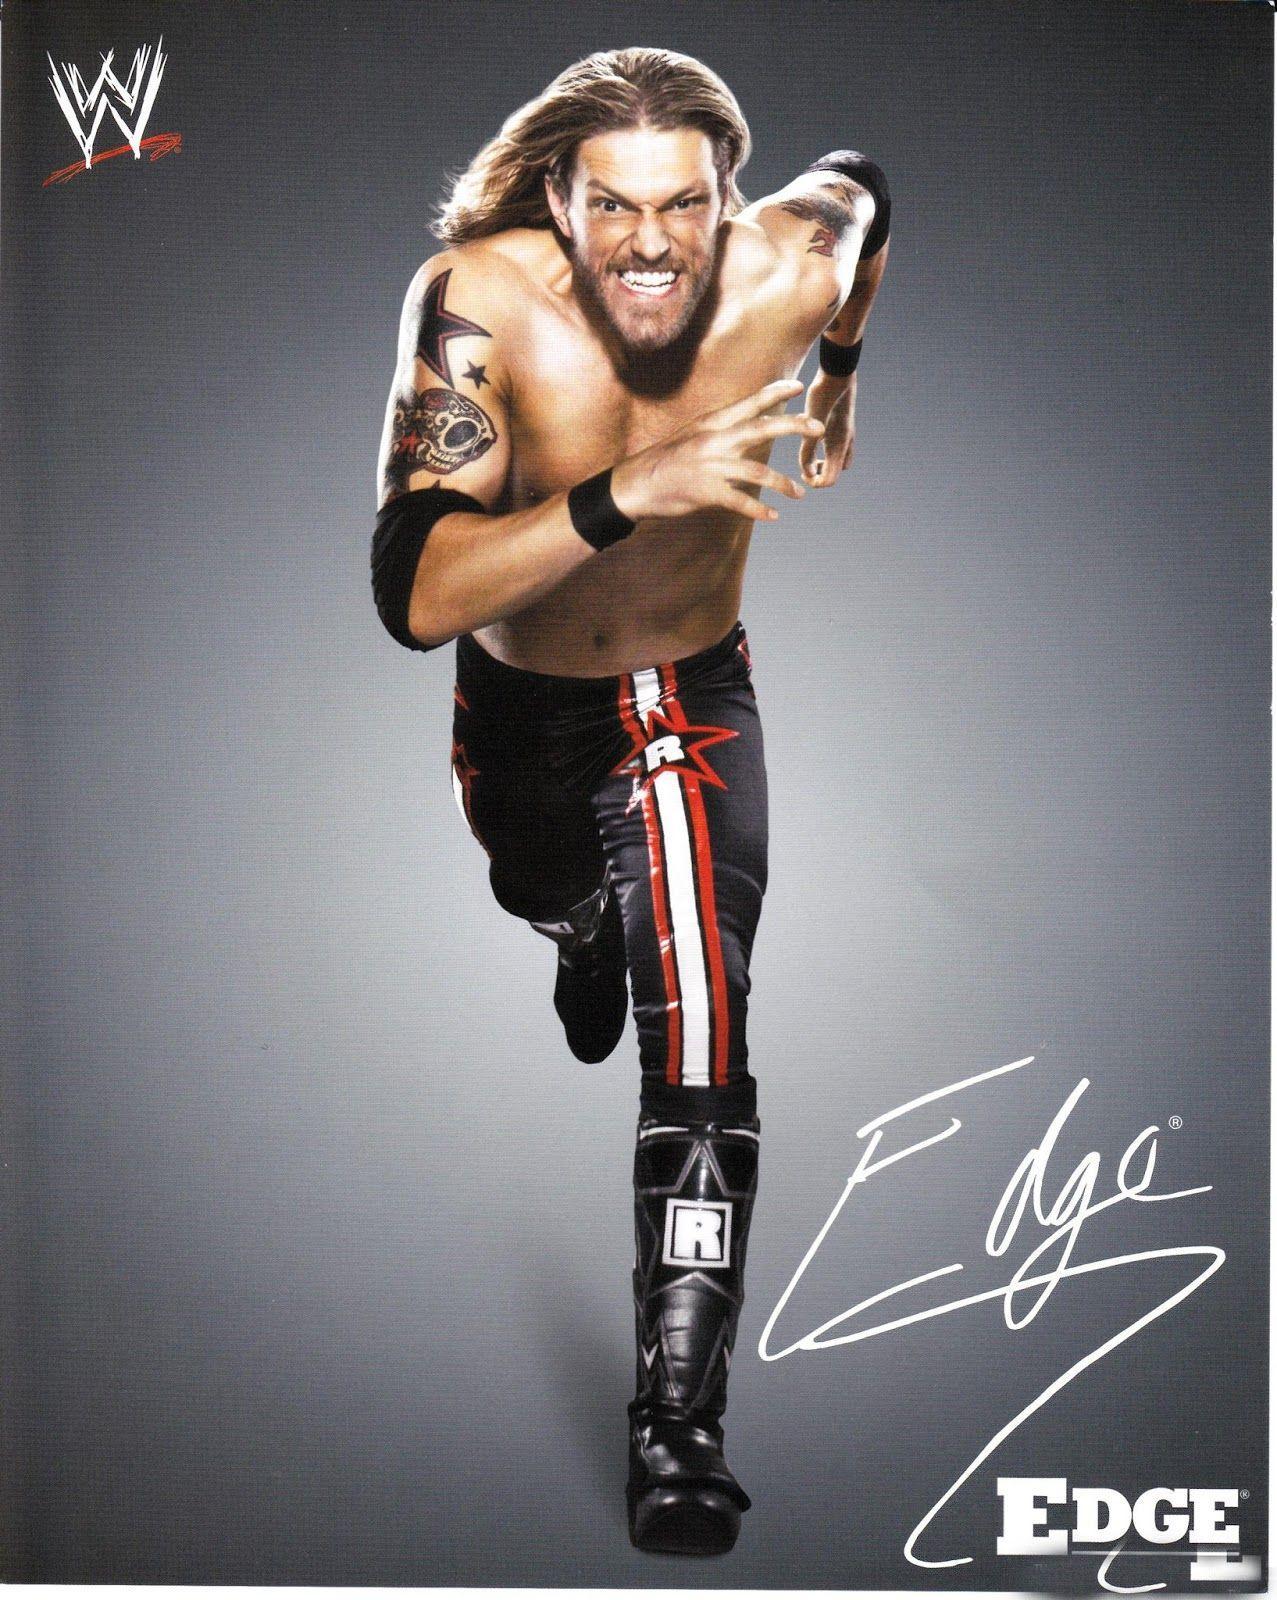 WWE HD Wallpaper Free: Edge